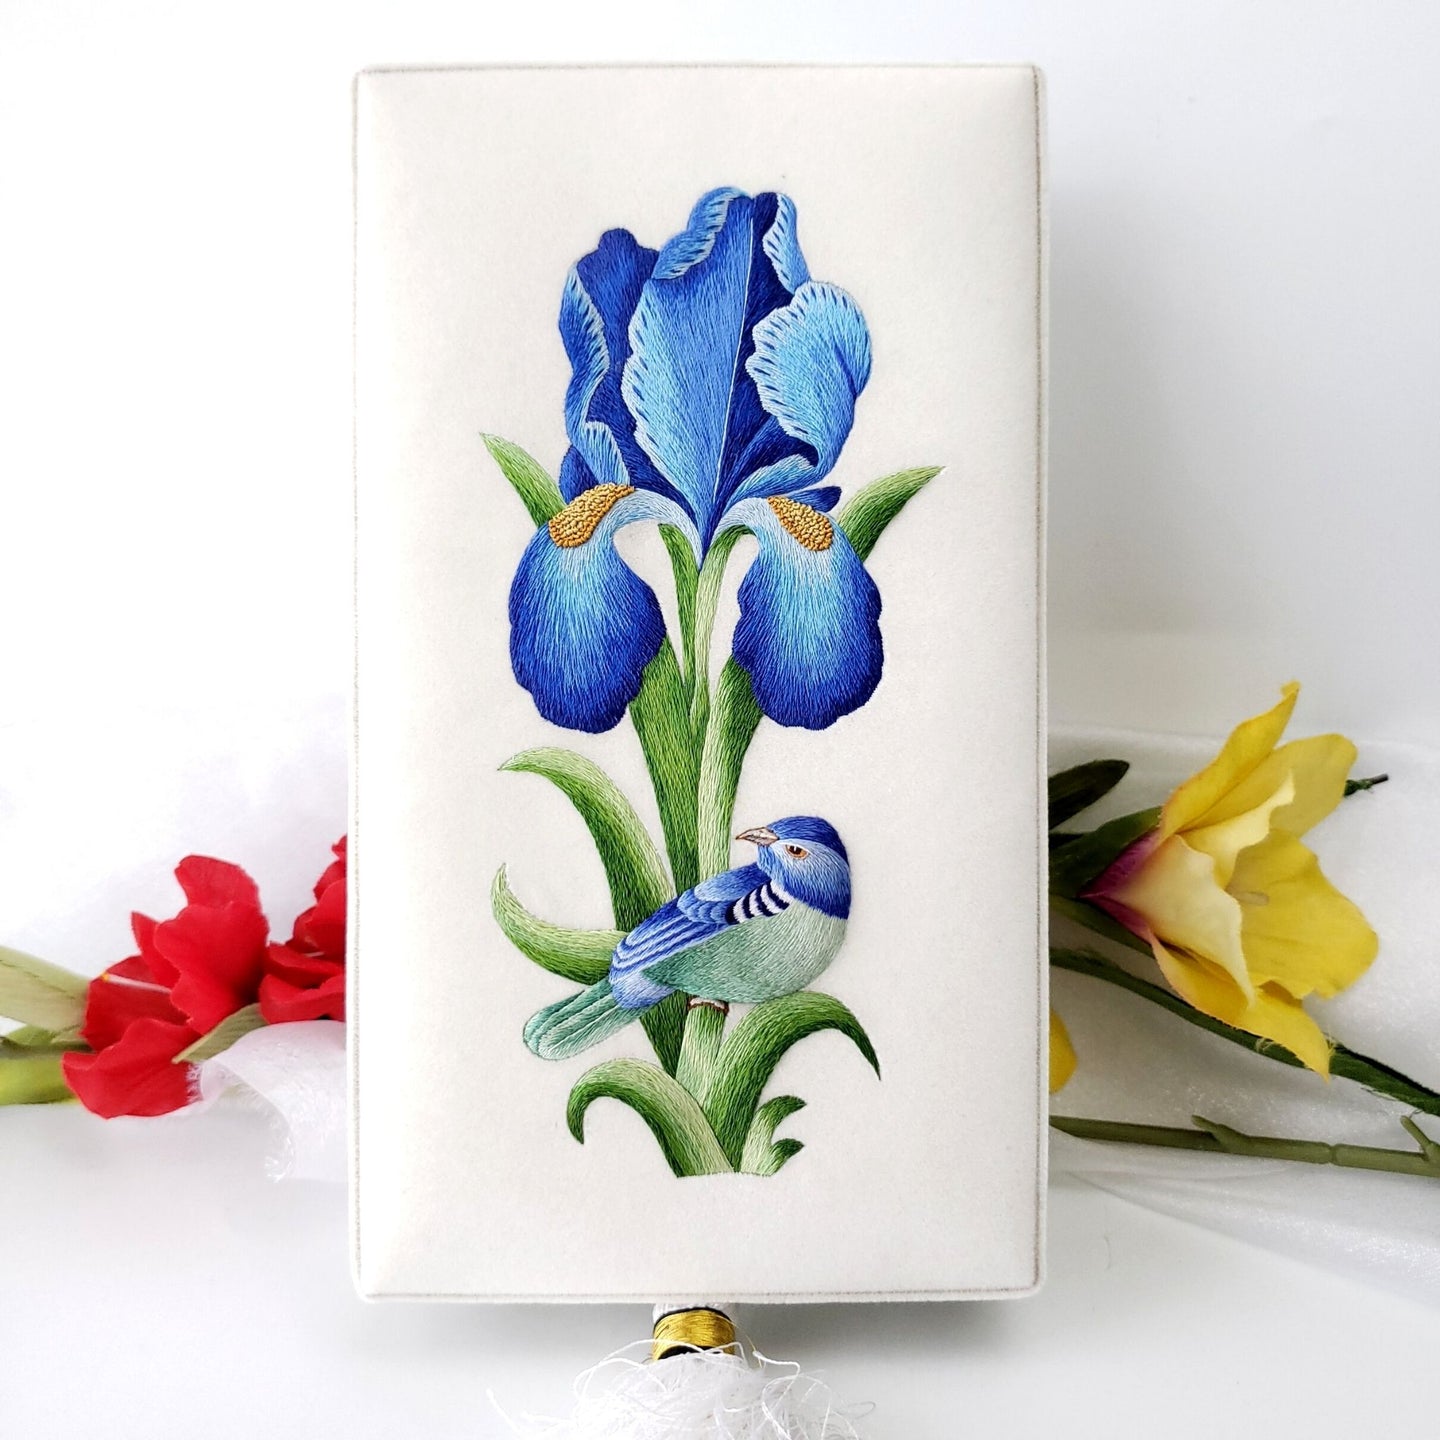 Embroidered blue bird and blue iris flower on ivory velvet keepsake box with tassel. 